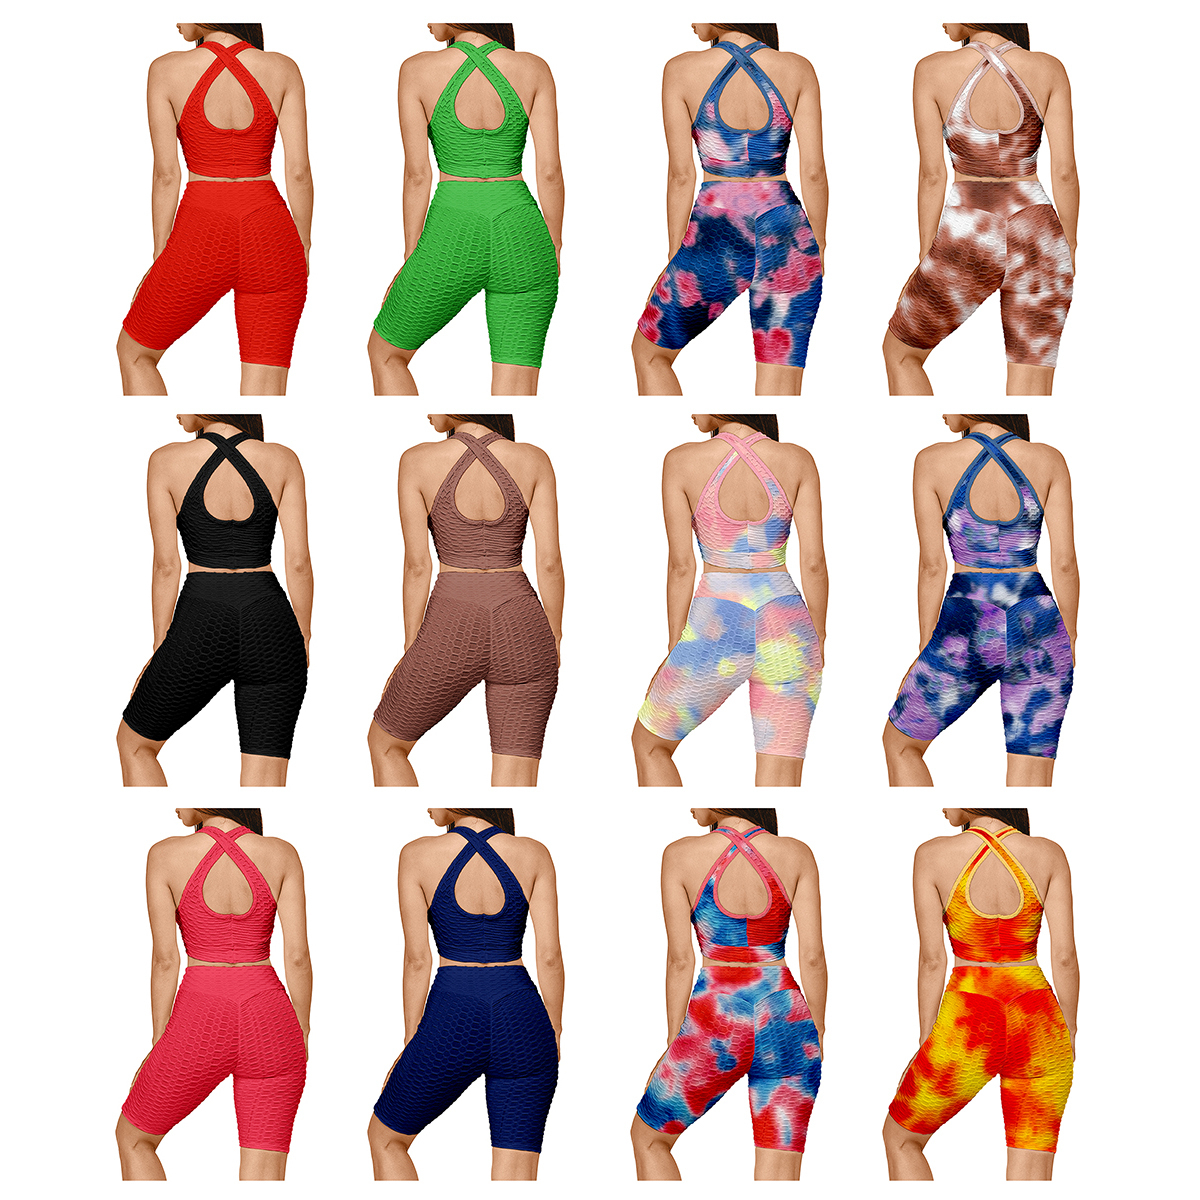 4-Piece Women's Anti Cellulite Sports Bra & High Waisted Biker Shorts Workout Yoga Set - Tie-Dye, Medium